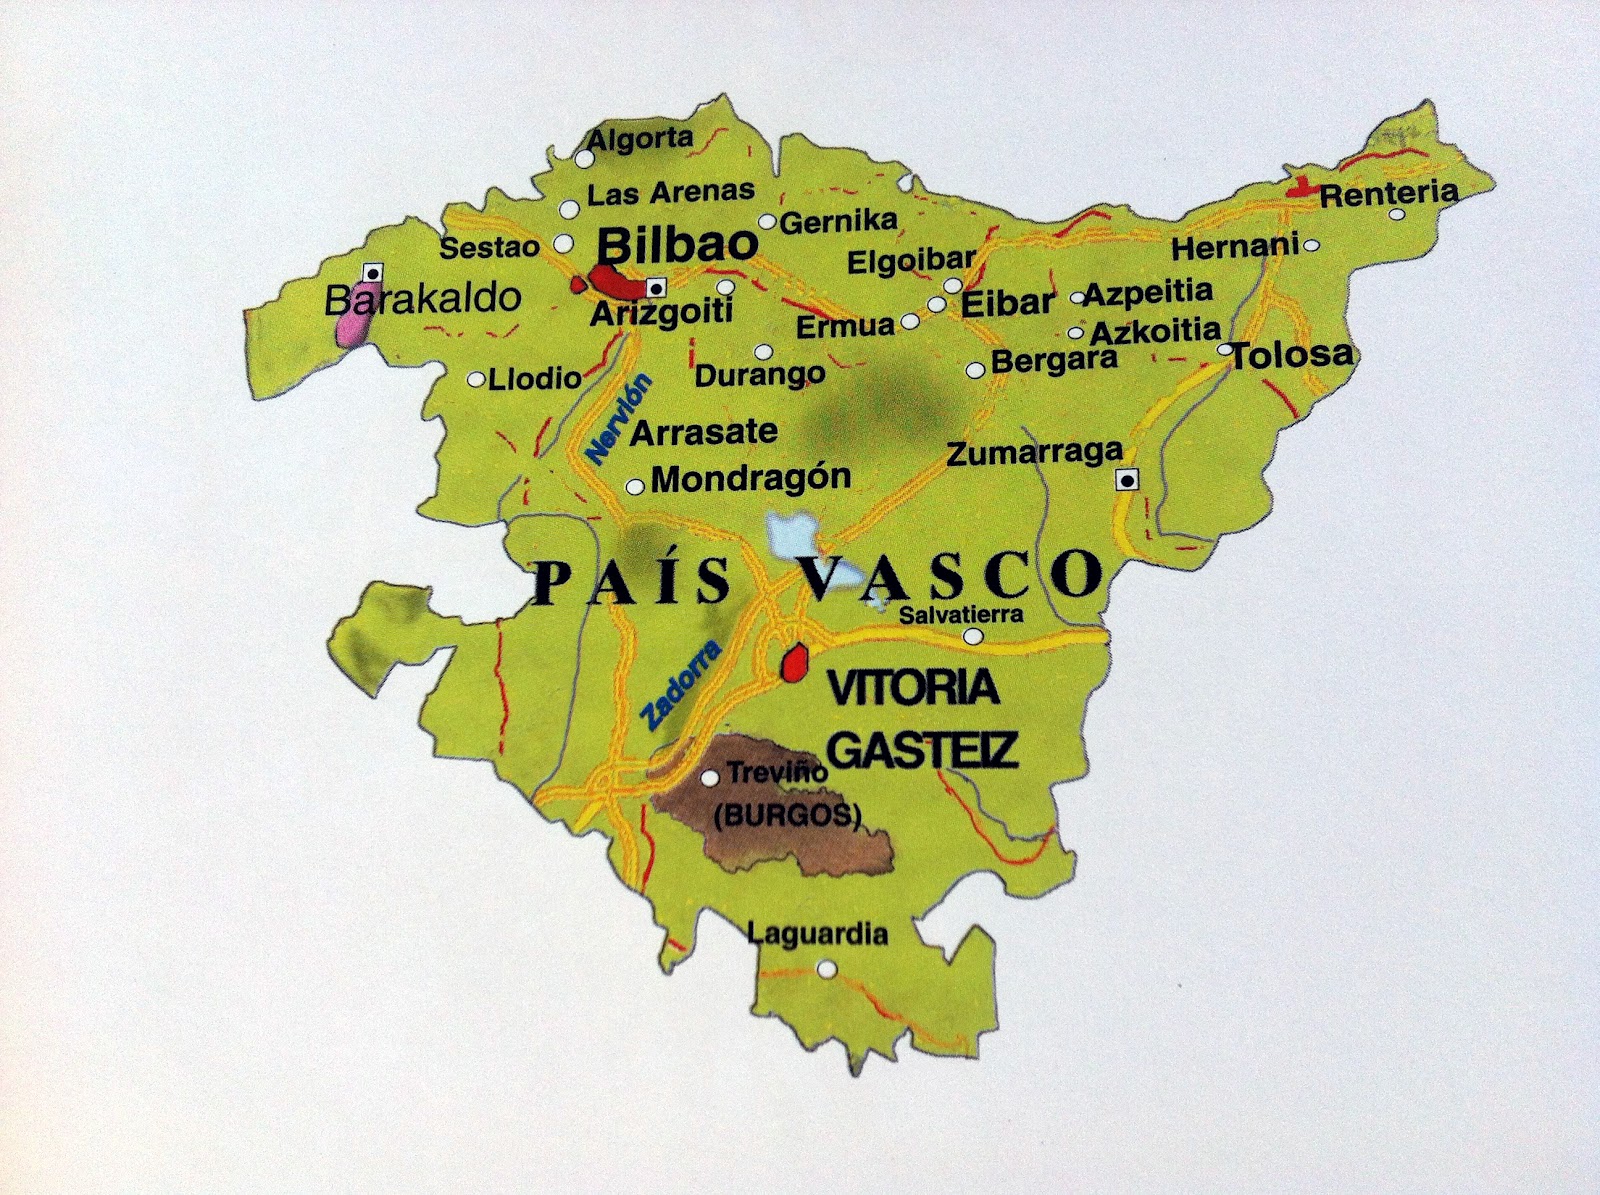 Provincias del pais vasco